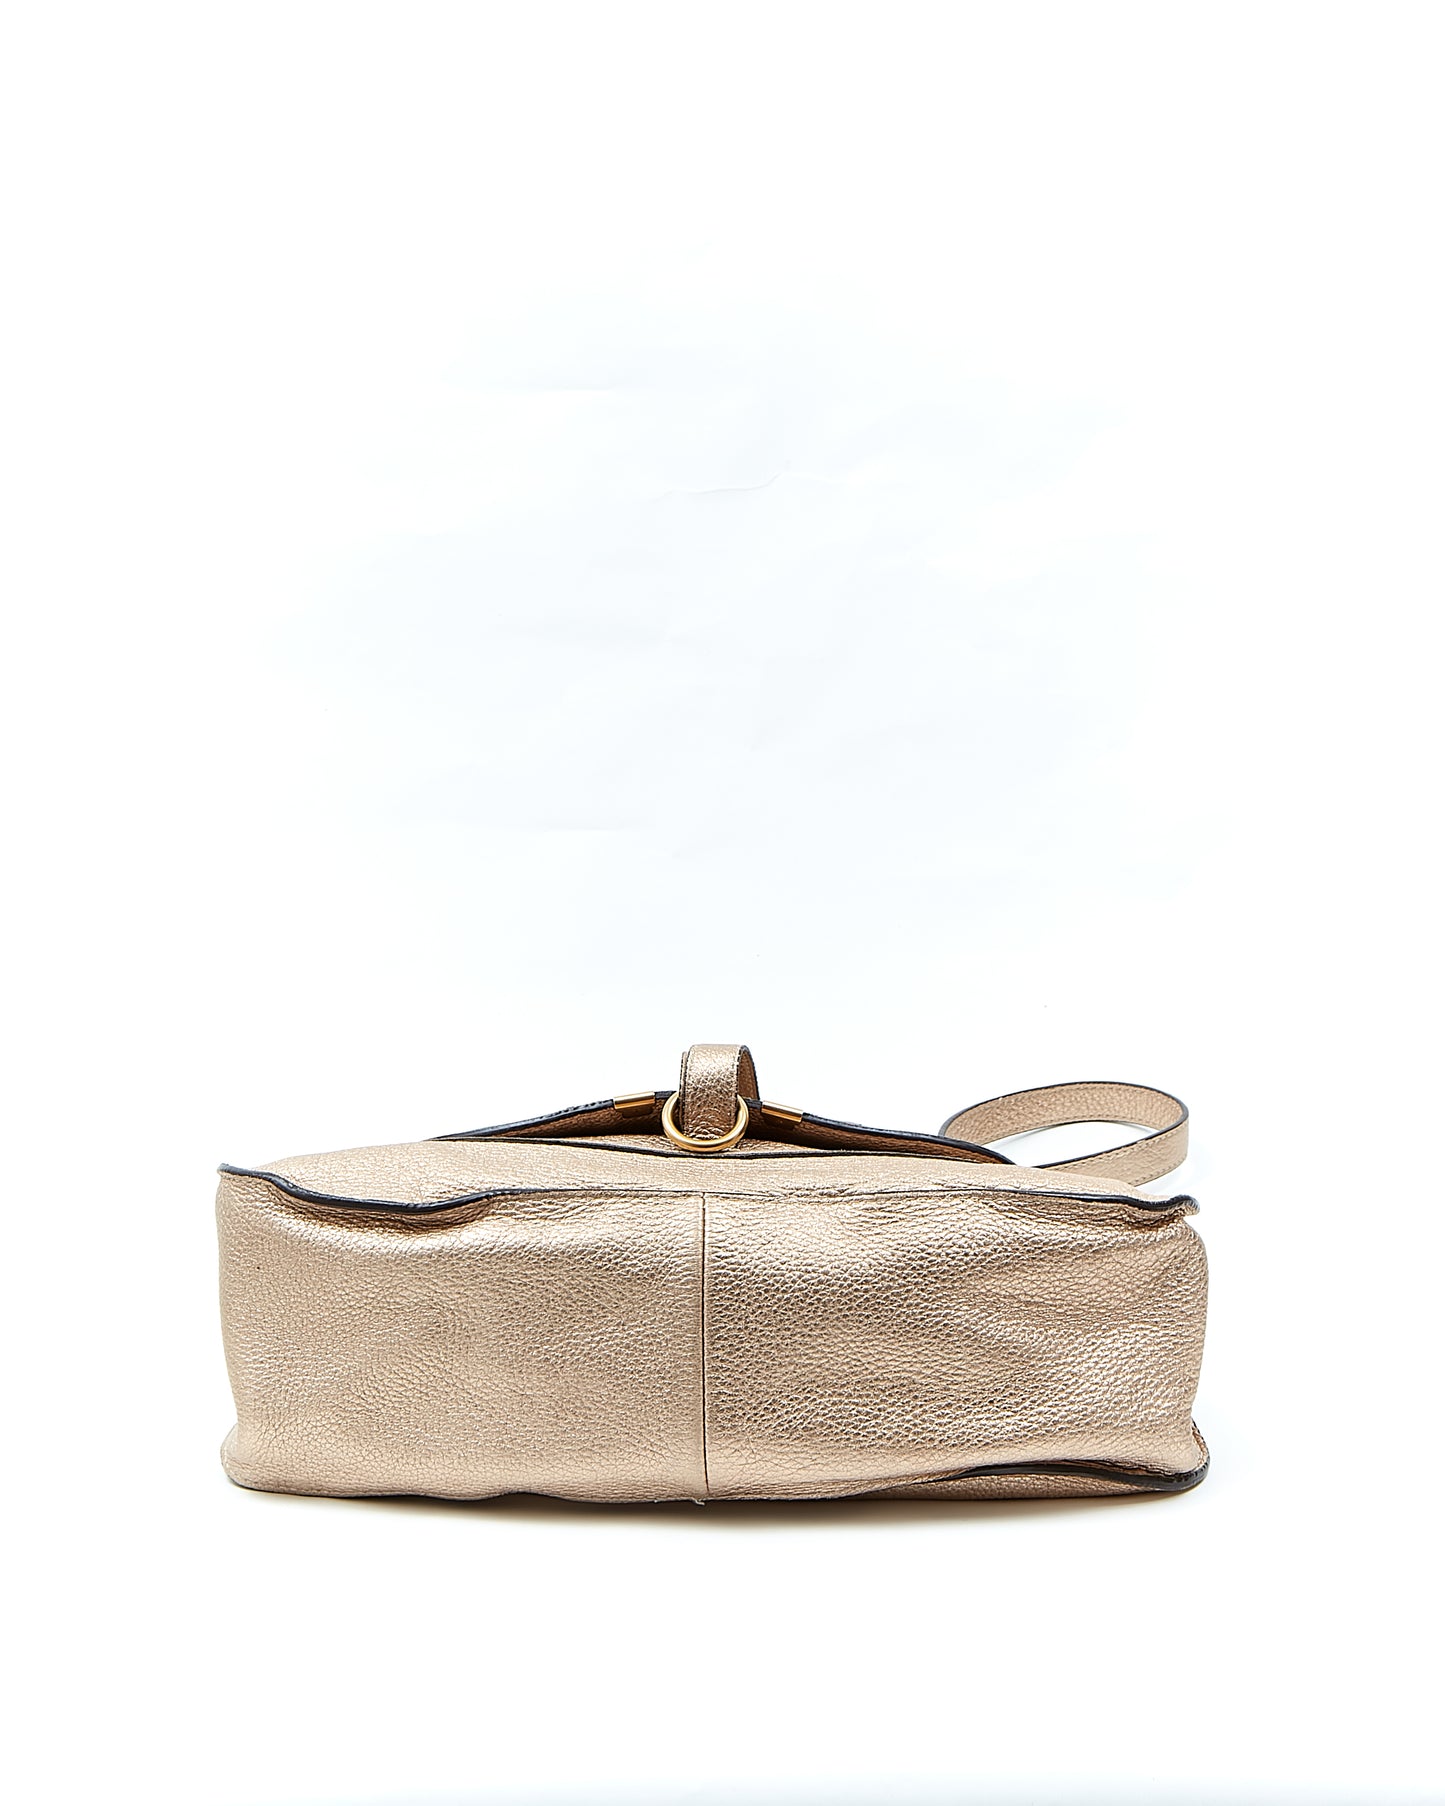 Chloe Metallic Gold Marcie Shoulder Convertible Bag